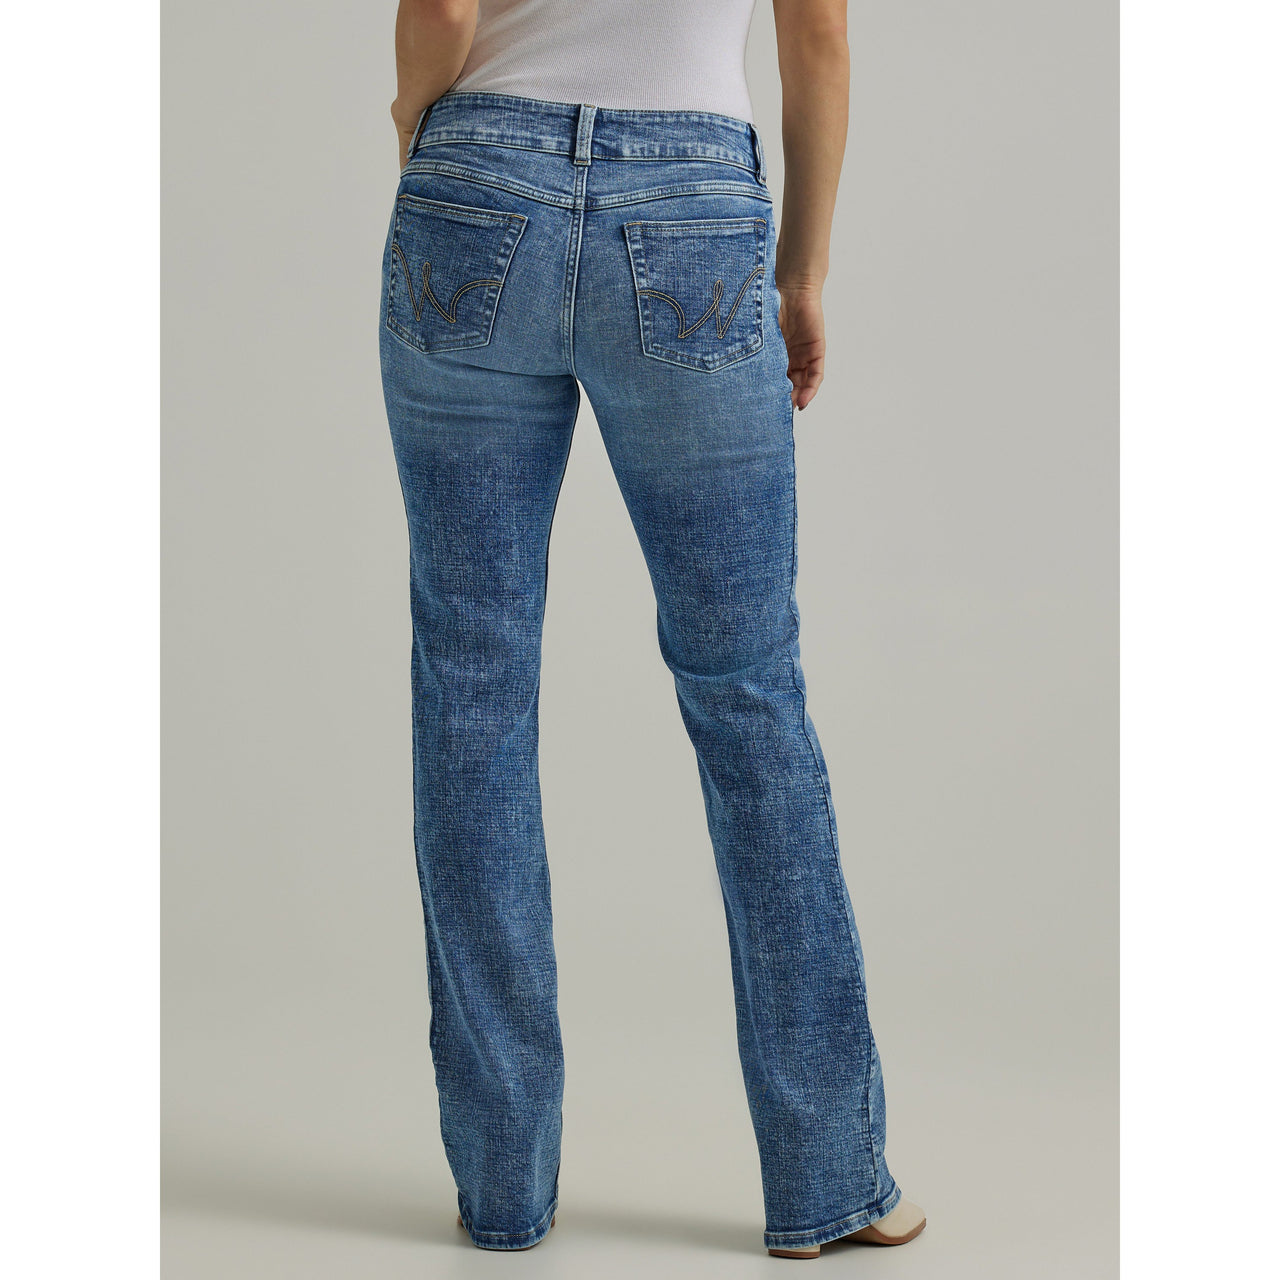 Wrangler Women's Essential Bootcut Jeans - Jayne